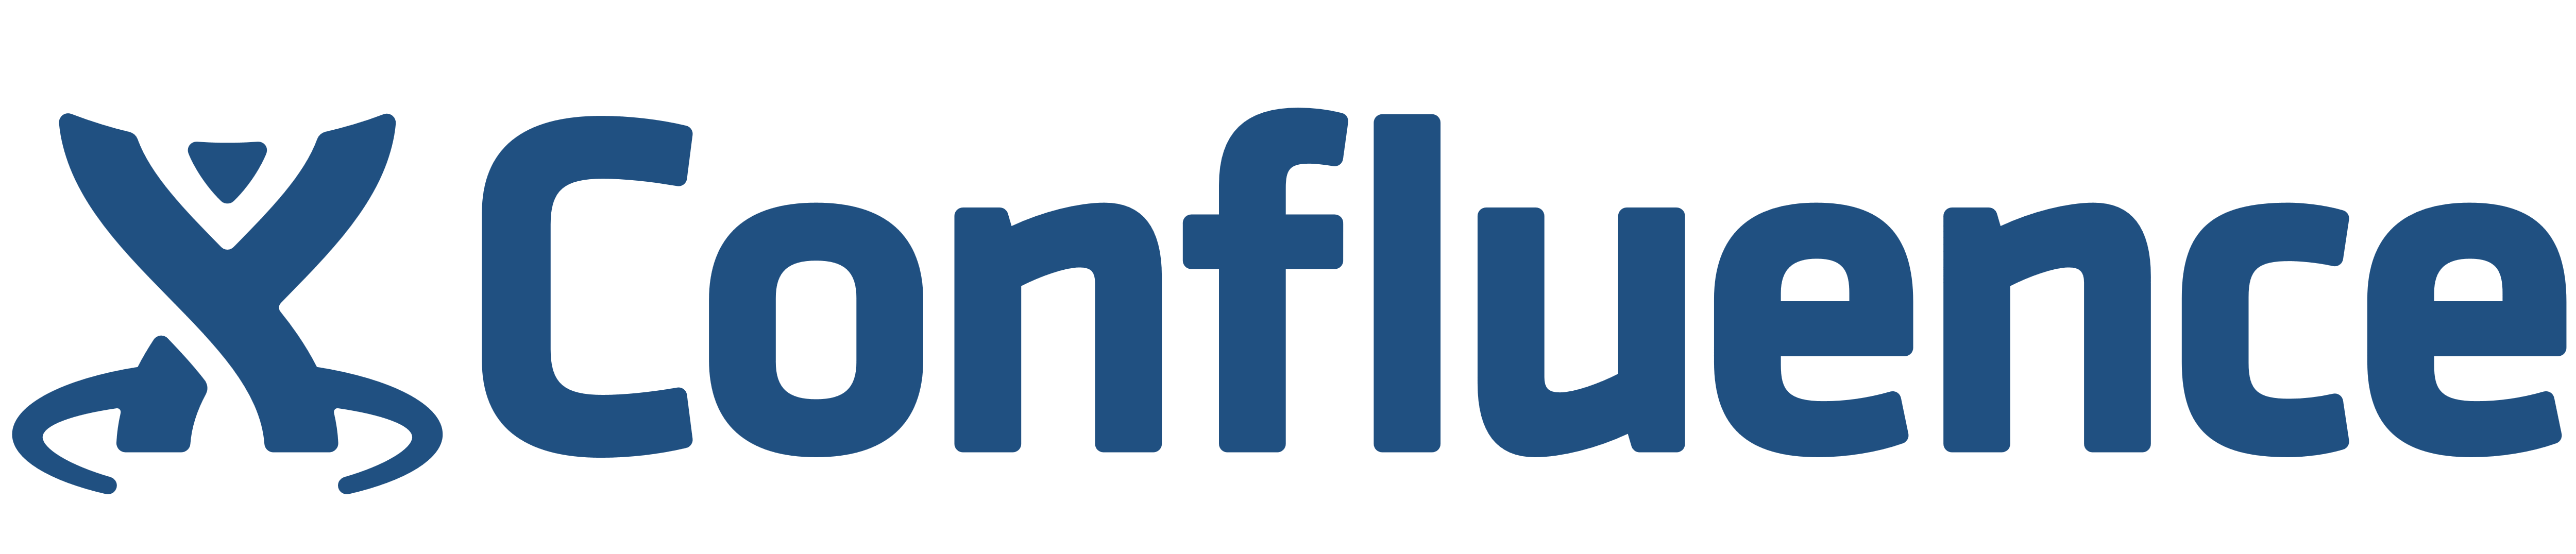 Confluence Logo - Confluence – Logos Download